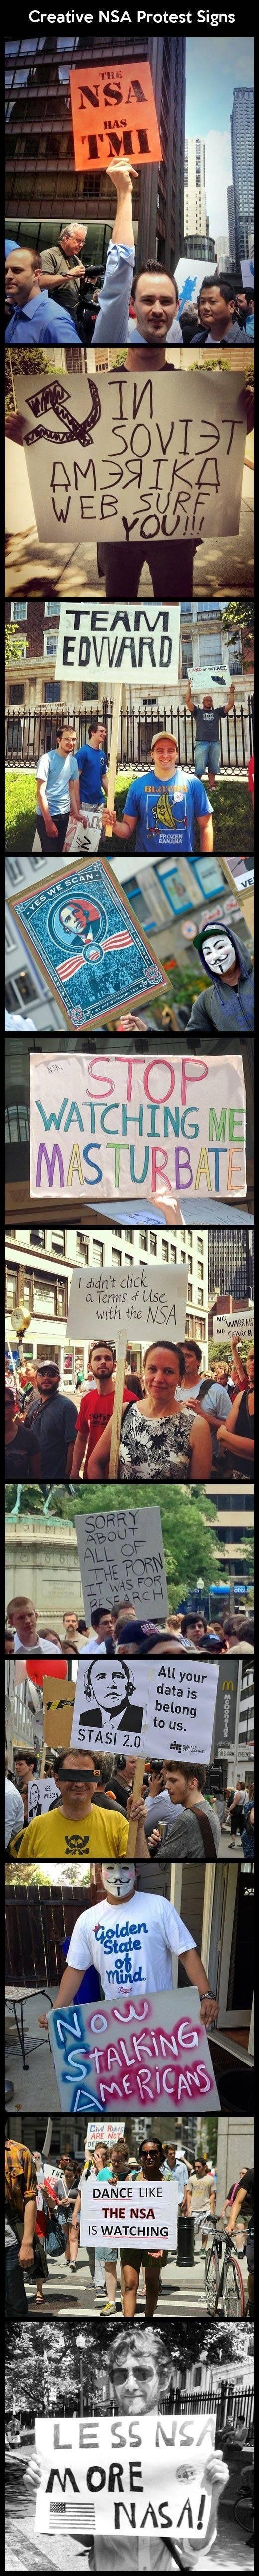 Creative NSA posters